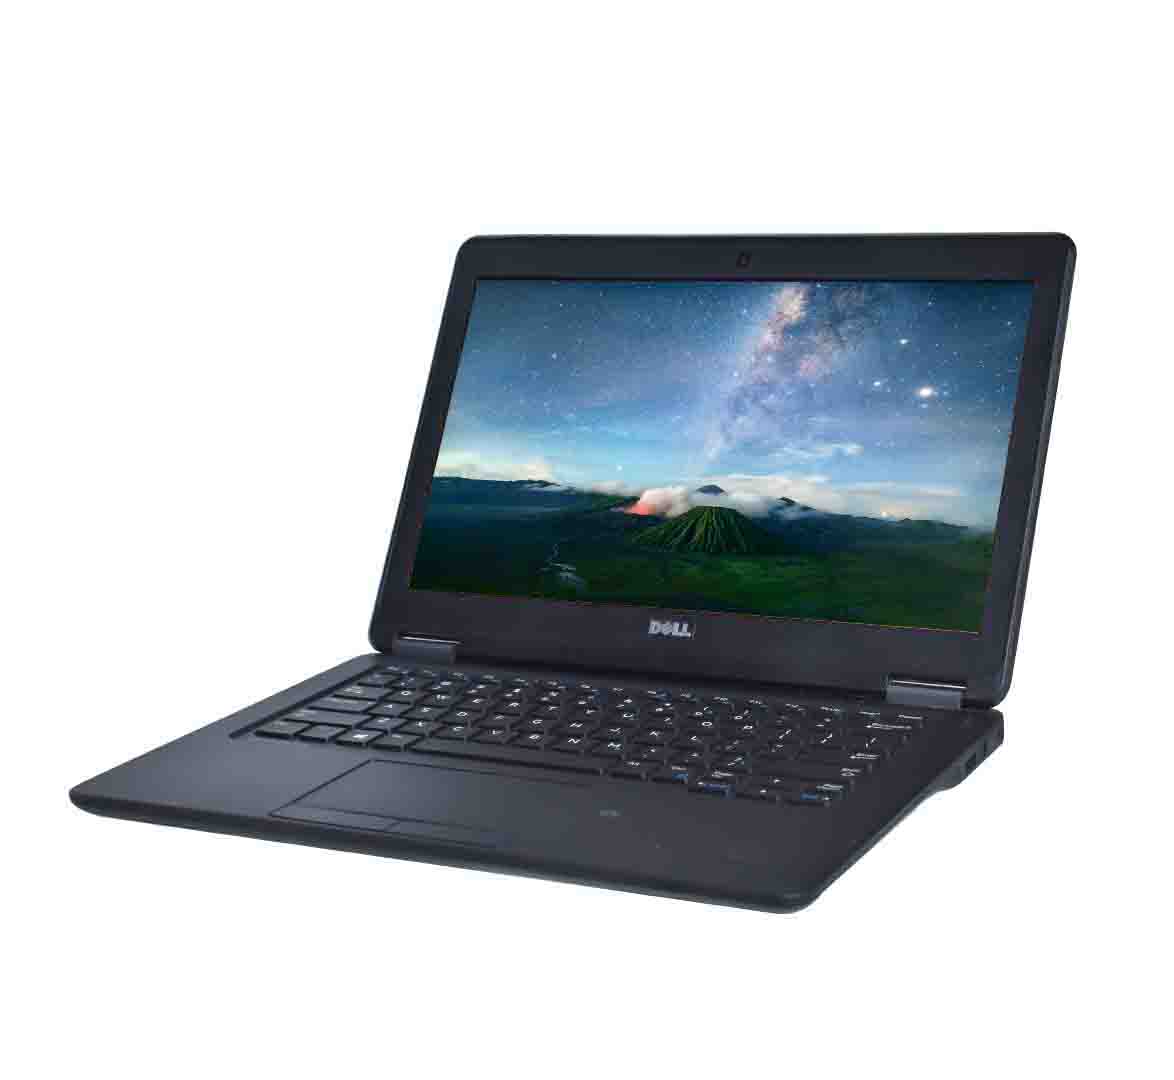 Dell Latitude E7250 Business Laptop, Intel Core i7-5th Generation CPU, 8GB RAM, 256GB SSD, 12.5 Inch Display, Windows 10 Pro